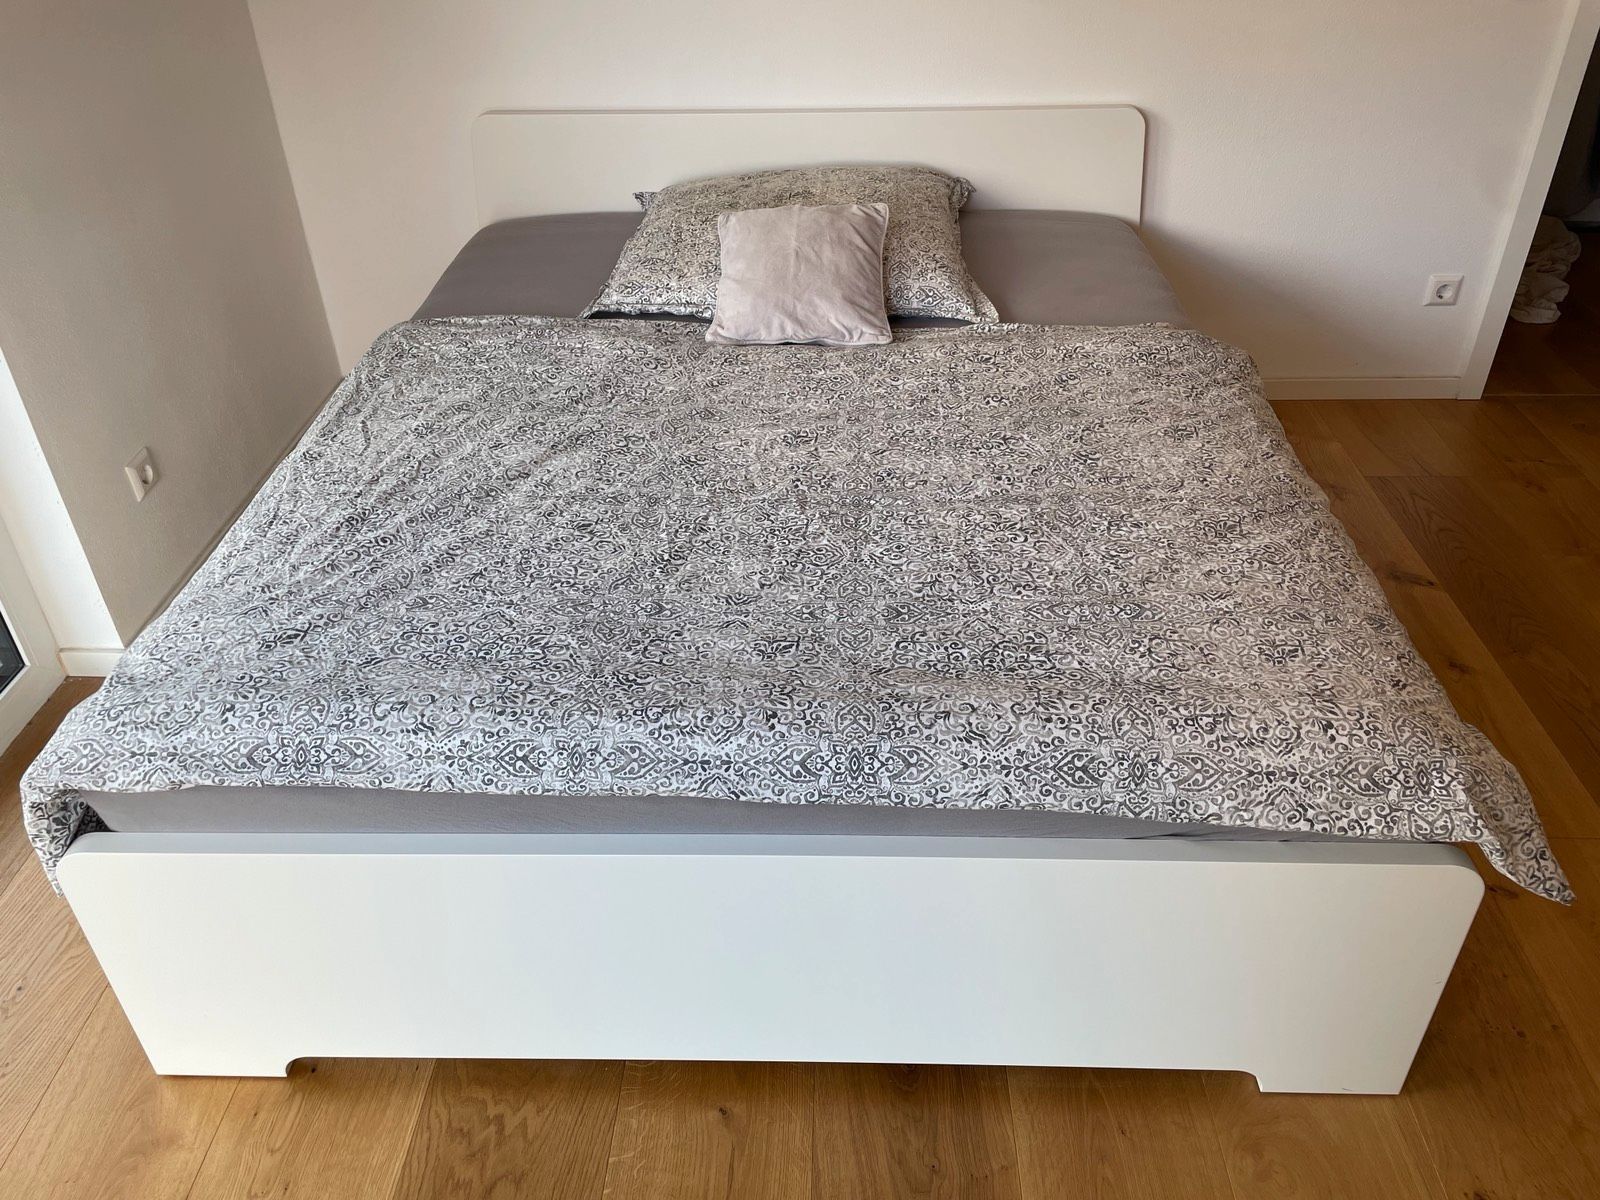 Łóżko z Ikea Askvoll 140x200, stelaż, materac GRATIS, dowóz